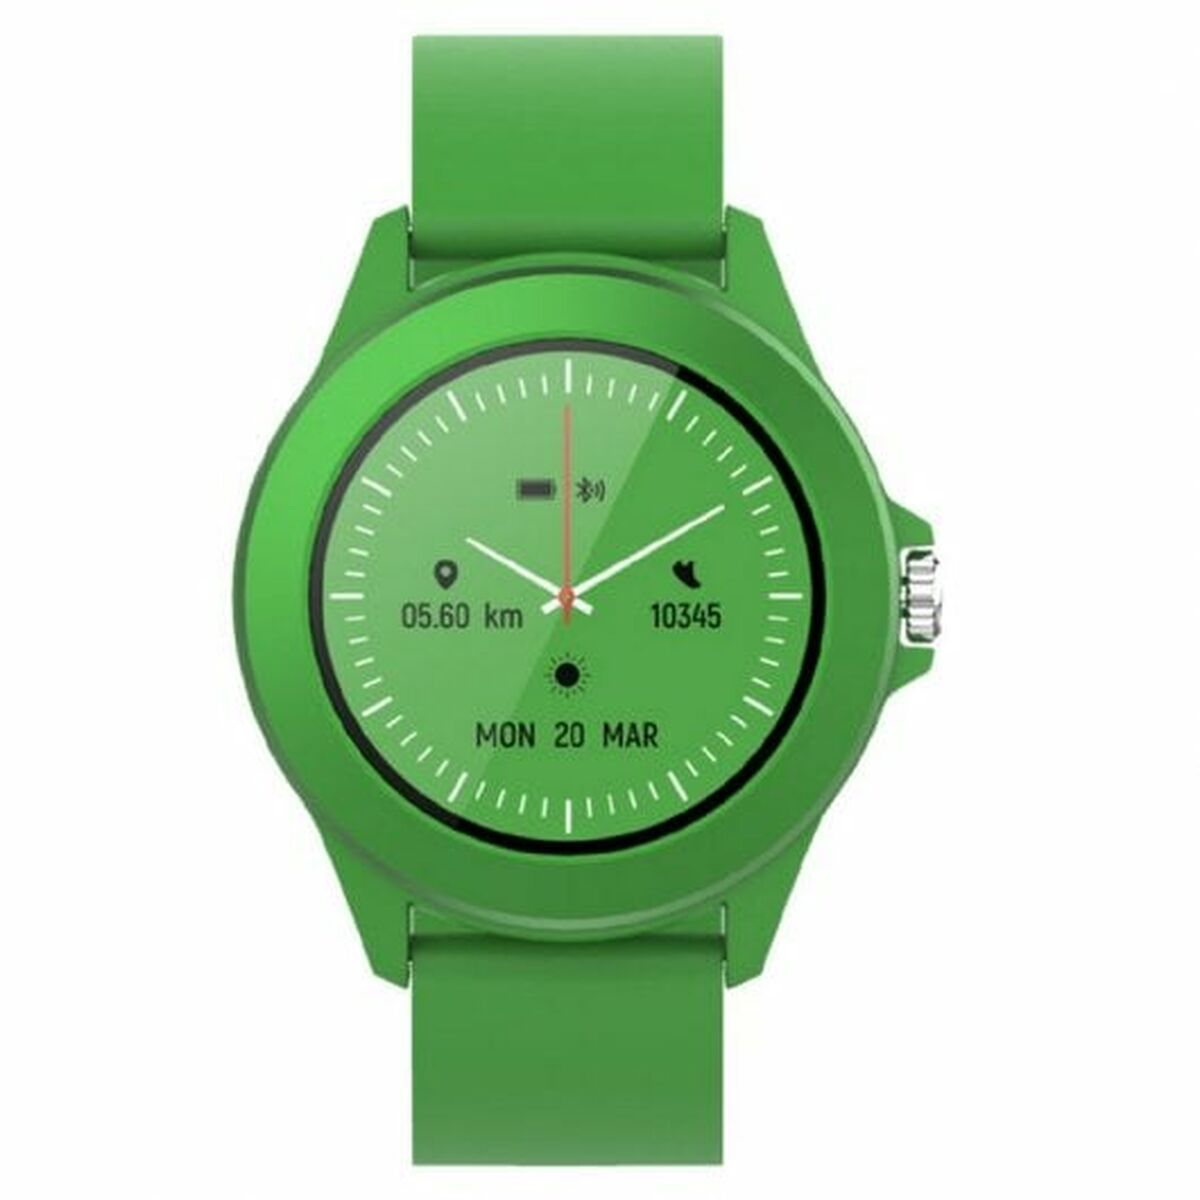 Smartwatch Forever CW-300 Groen